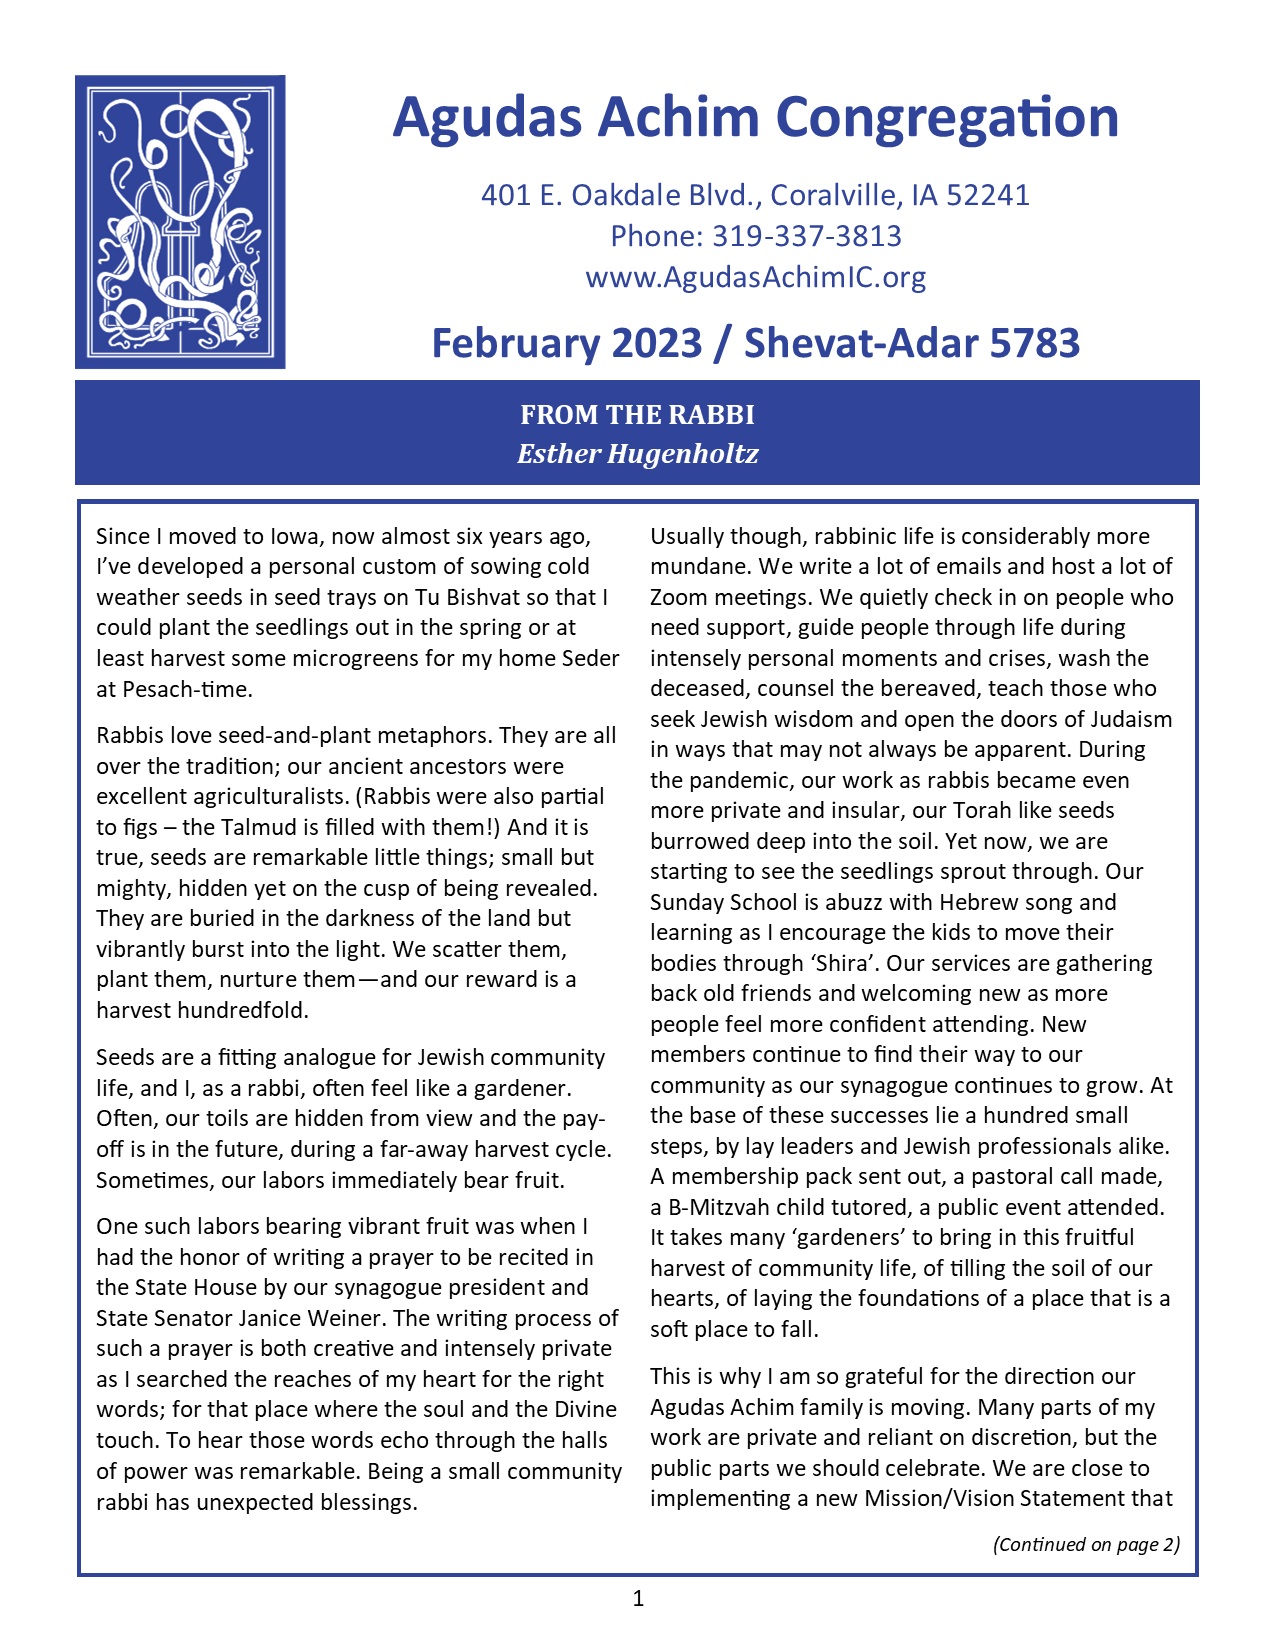 February 2023 Bulletin